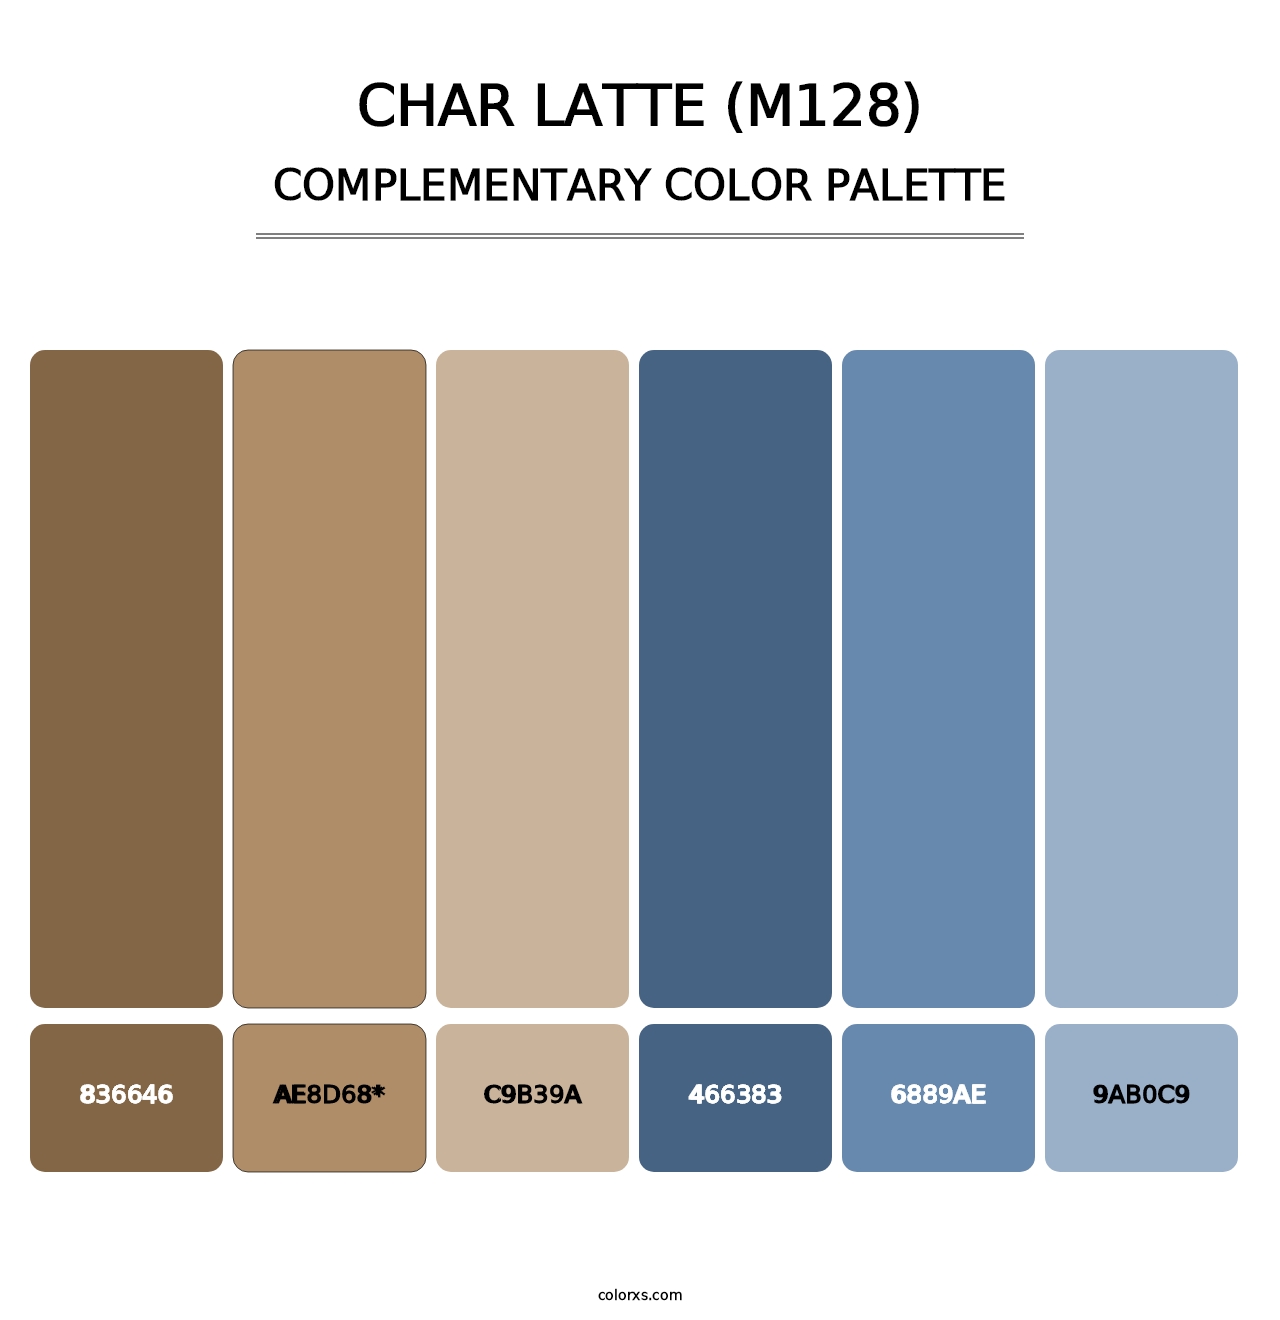 Char Latte (M128) - Complementary Color Palette